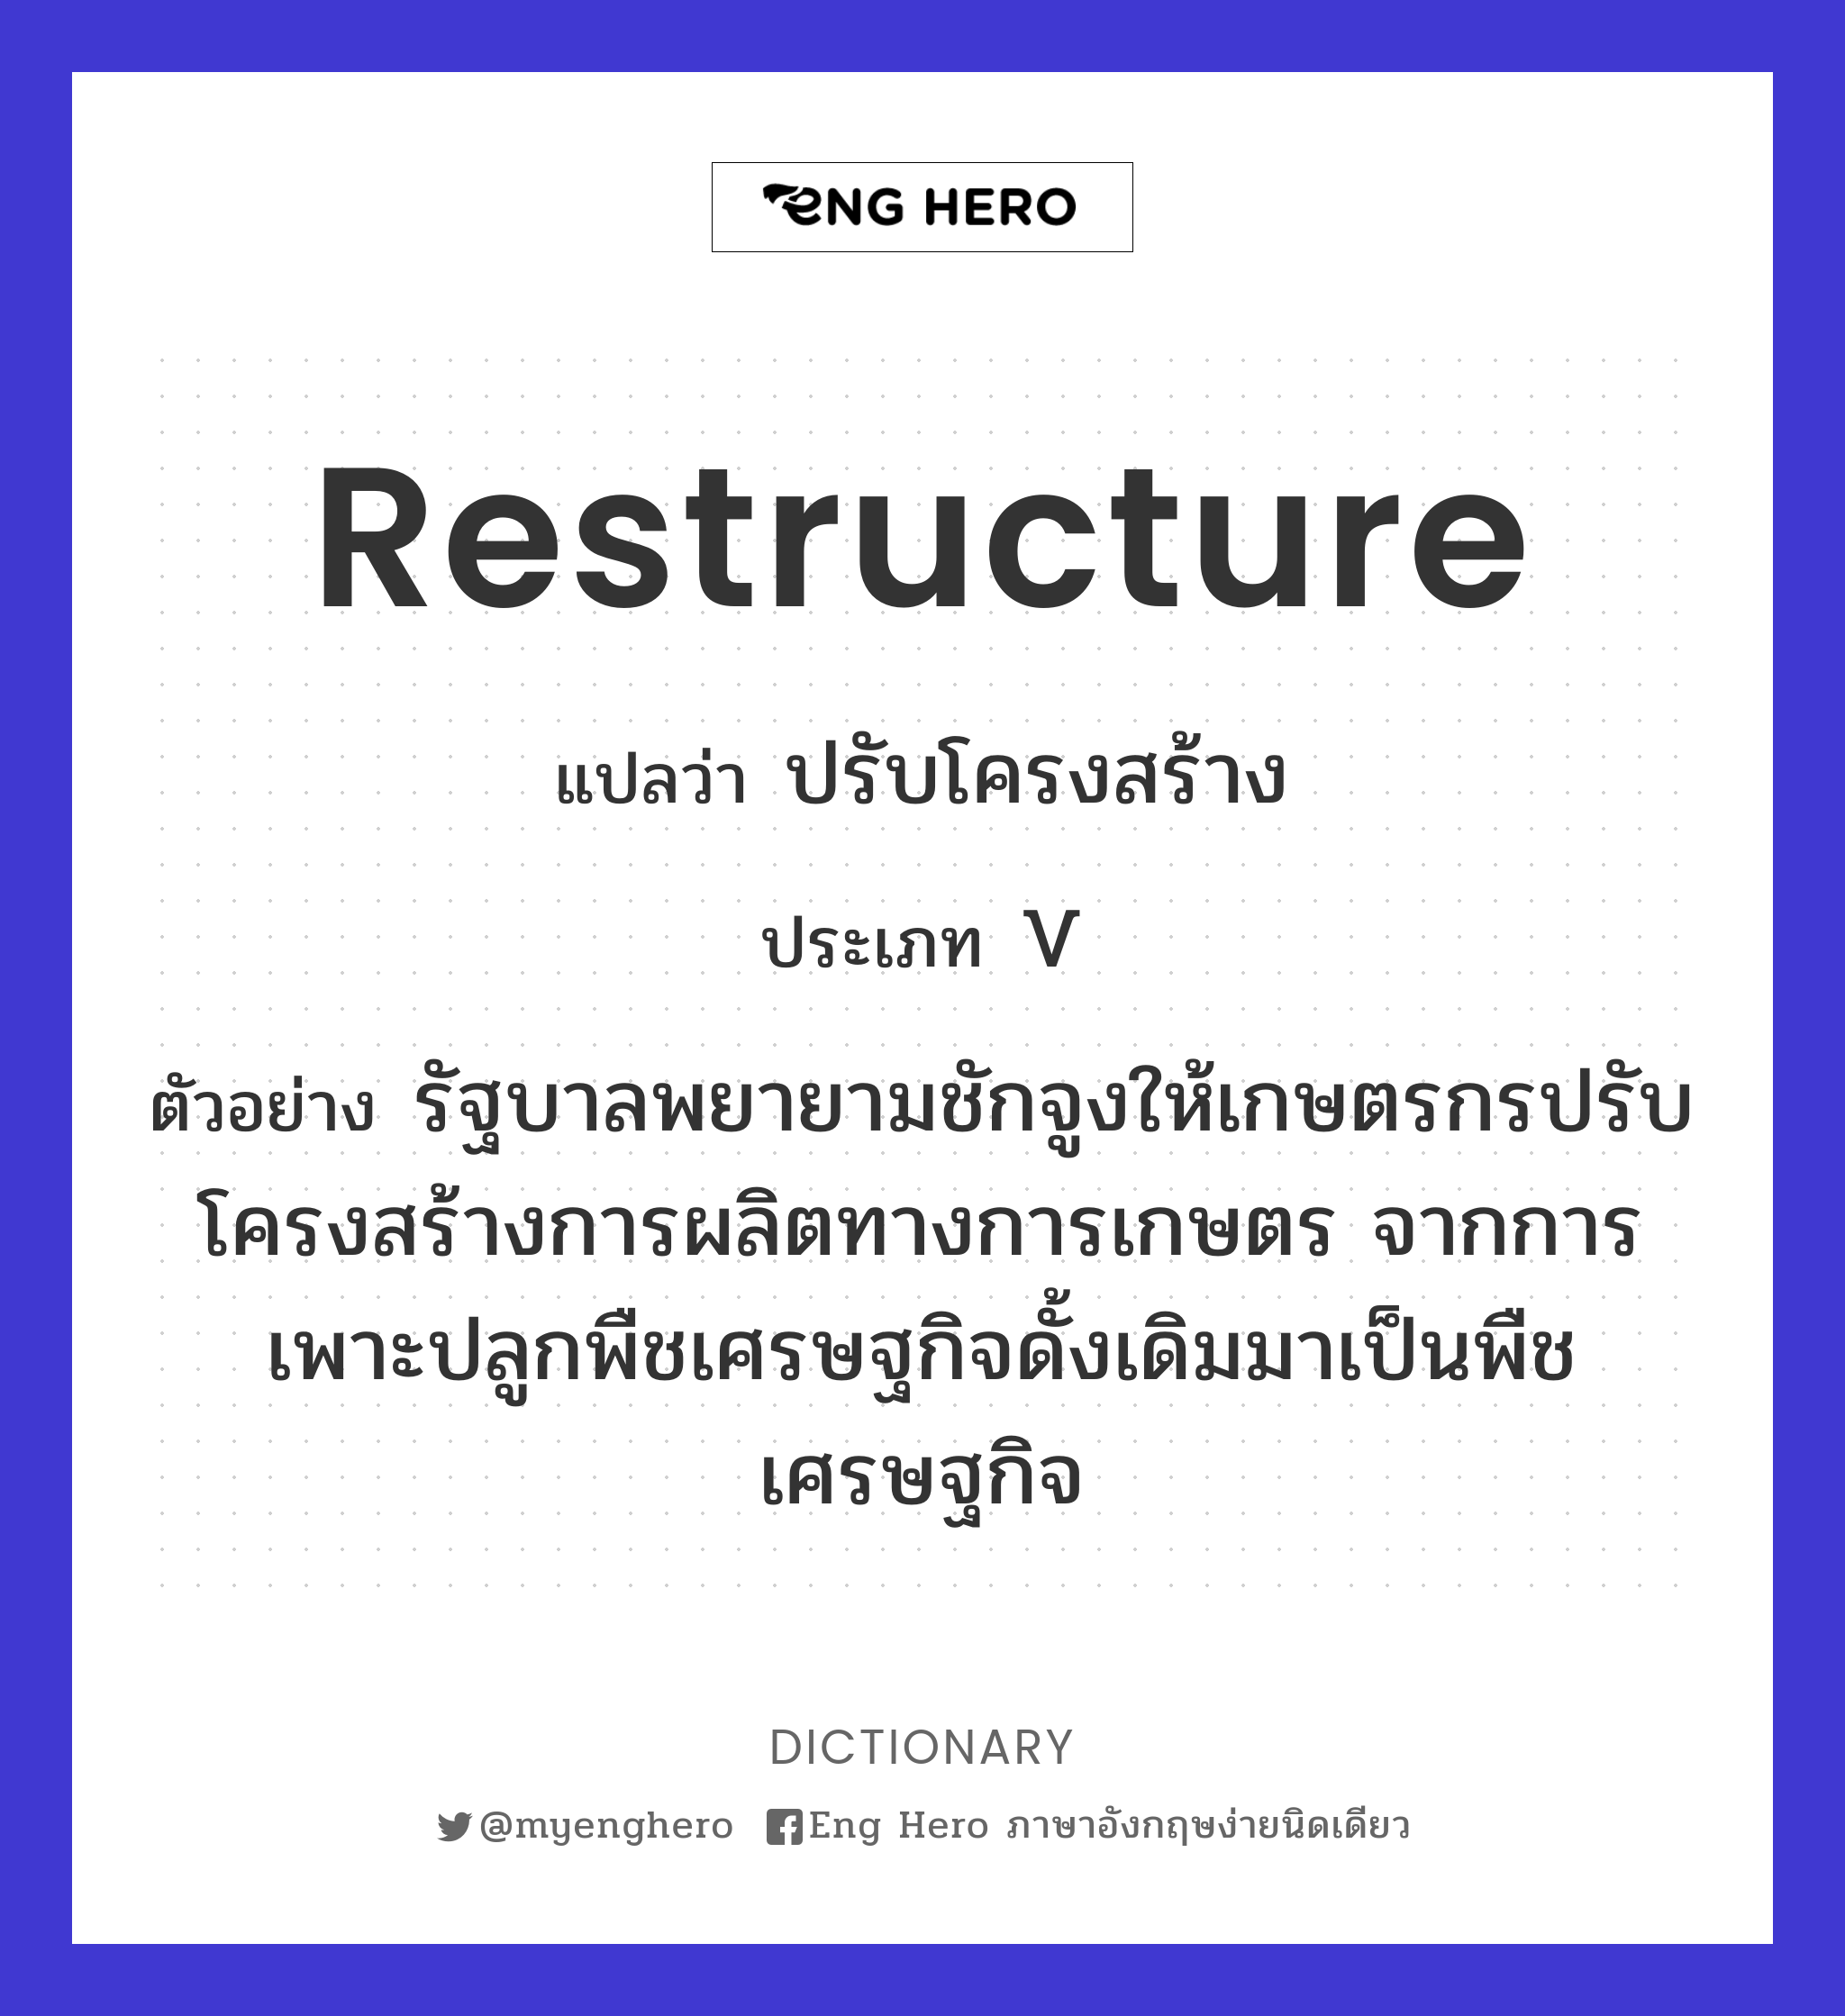 restructure